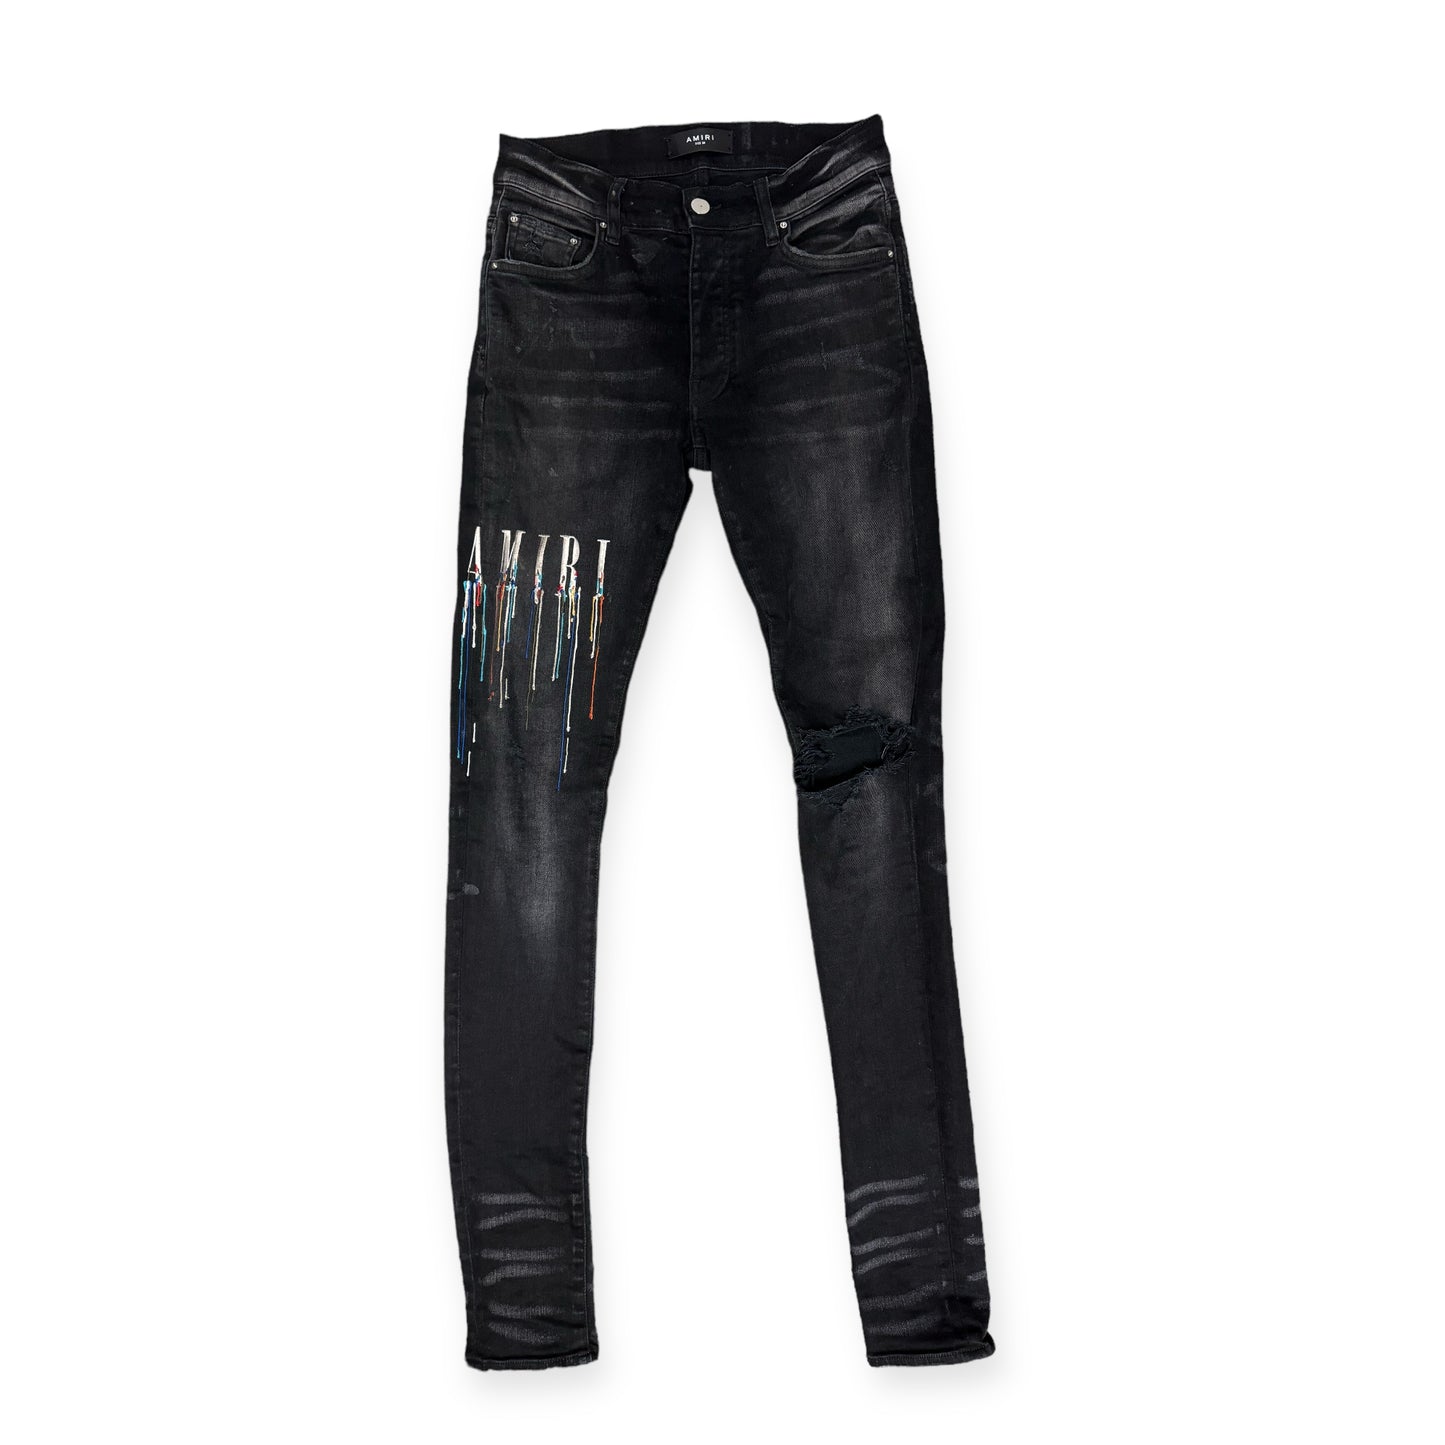 Amiri Black Denim Jeans size 28